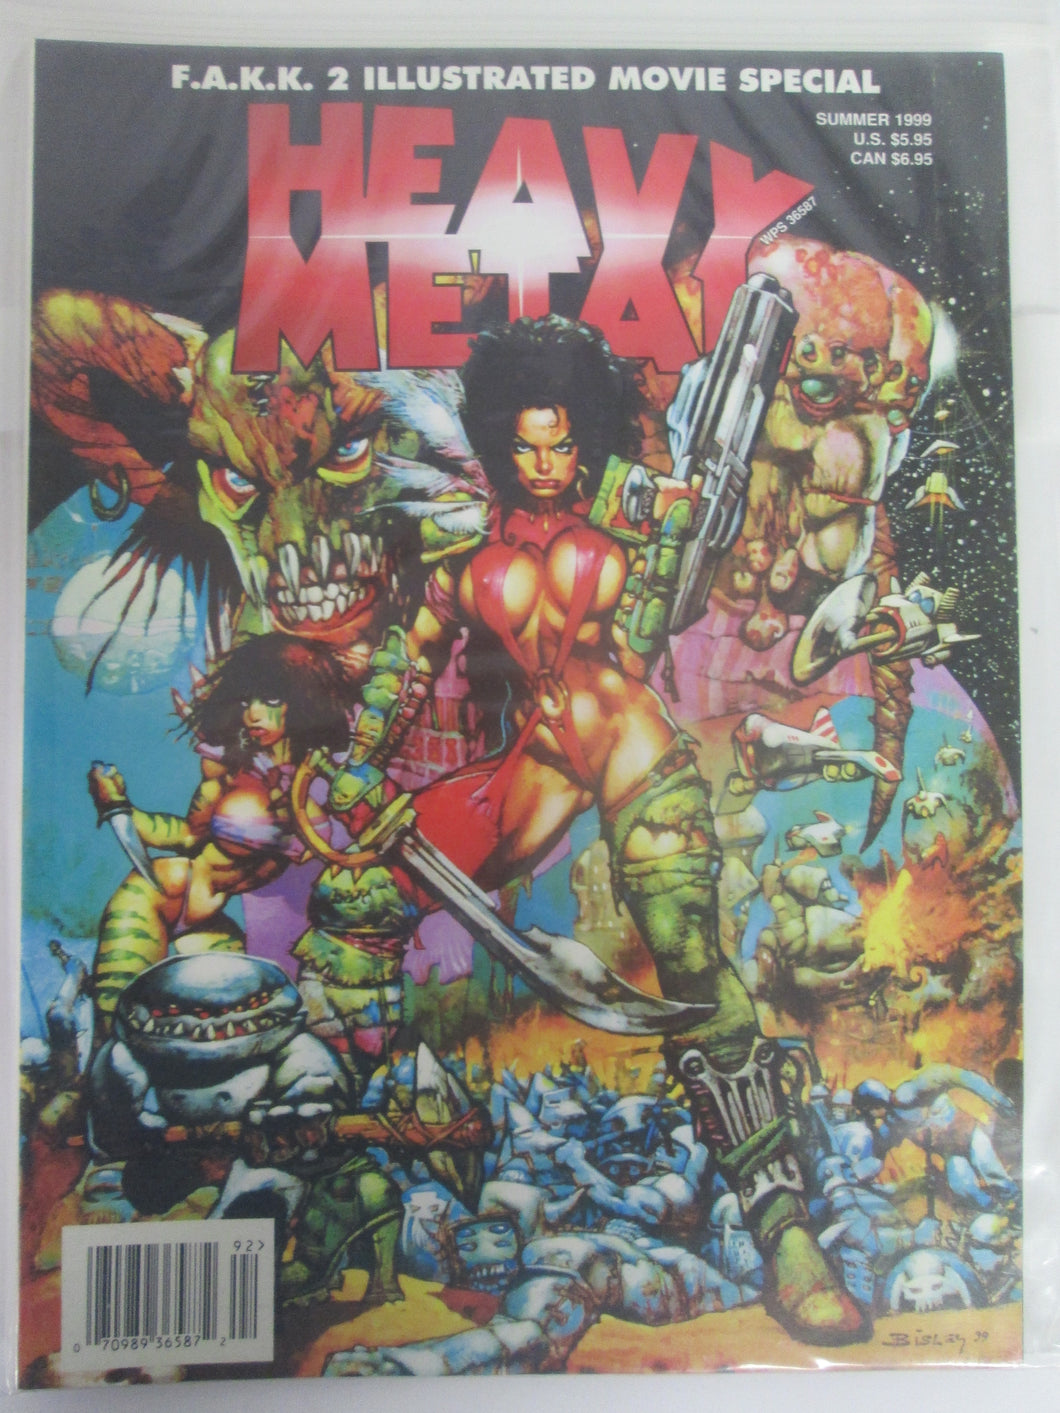 Heavy Metal Magazine Summer 1999 FAKK2 Movie Special